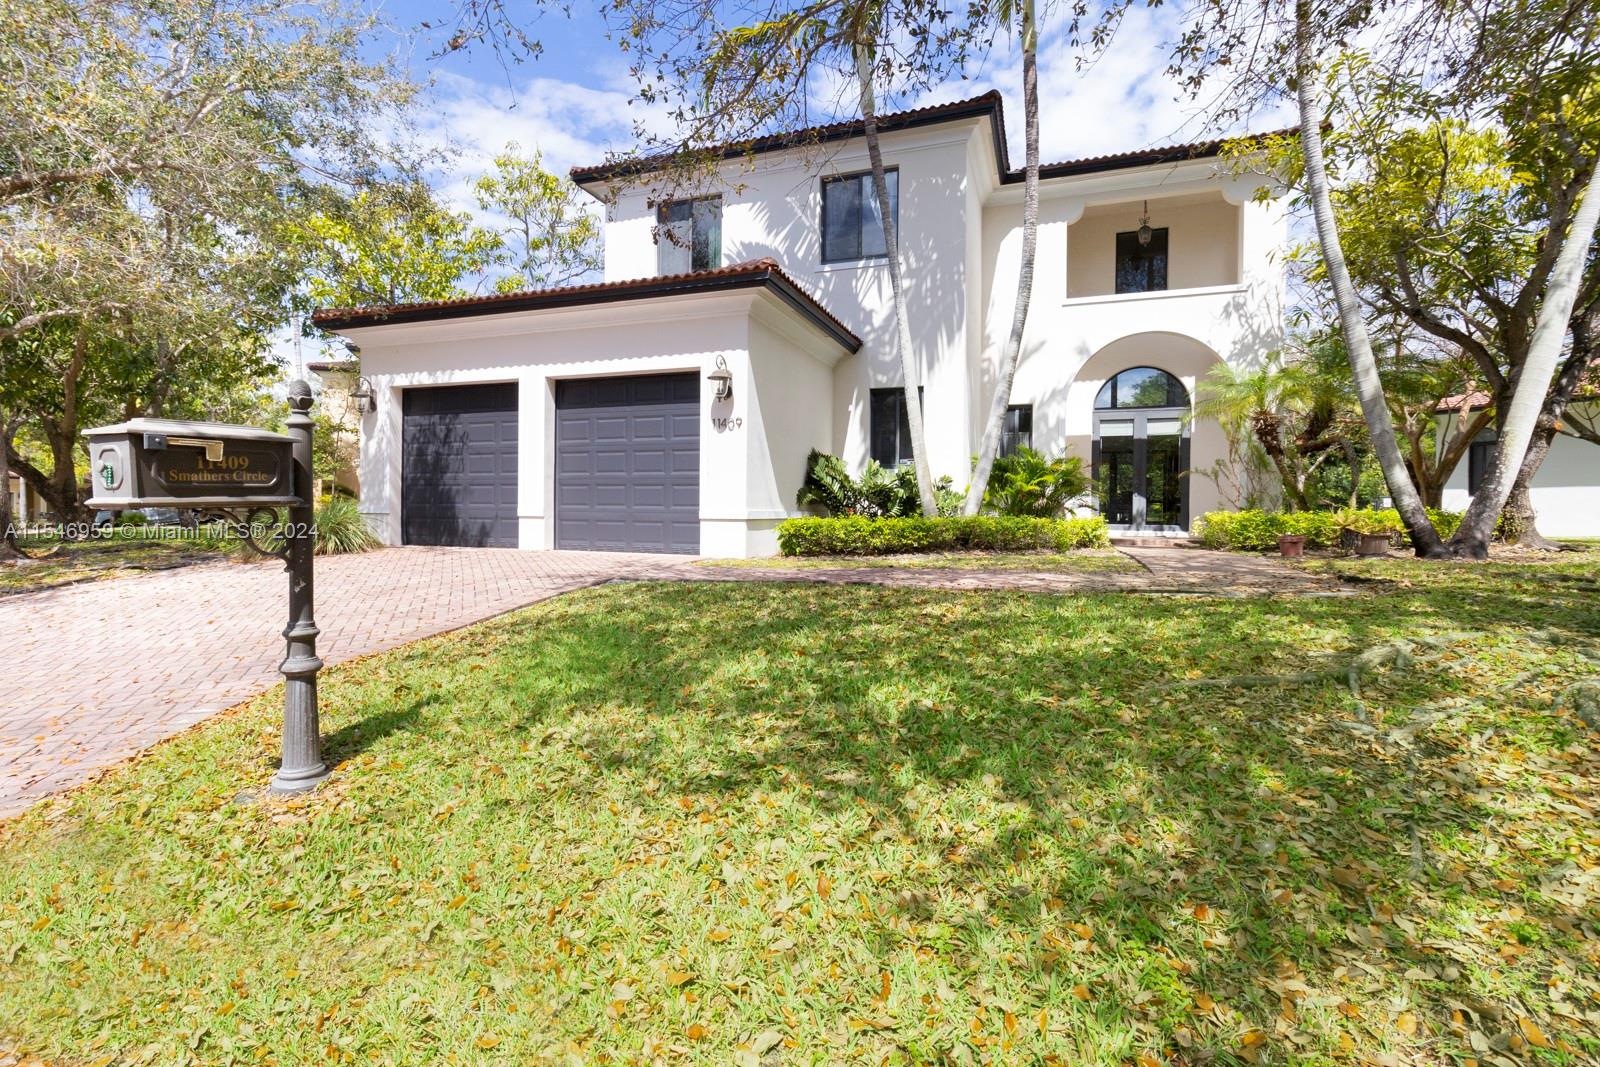 Property for Sale at 11409 Smathers Cir Cir, Pinecrest, Miami-Dade County, Florida - Bedrooms: 3 
Bathrooms: 3  - $1,799,000